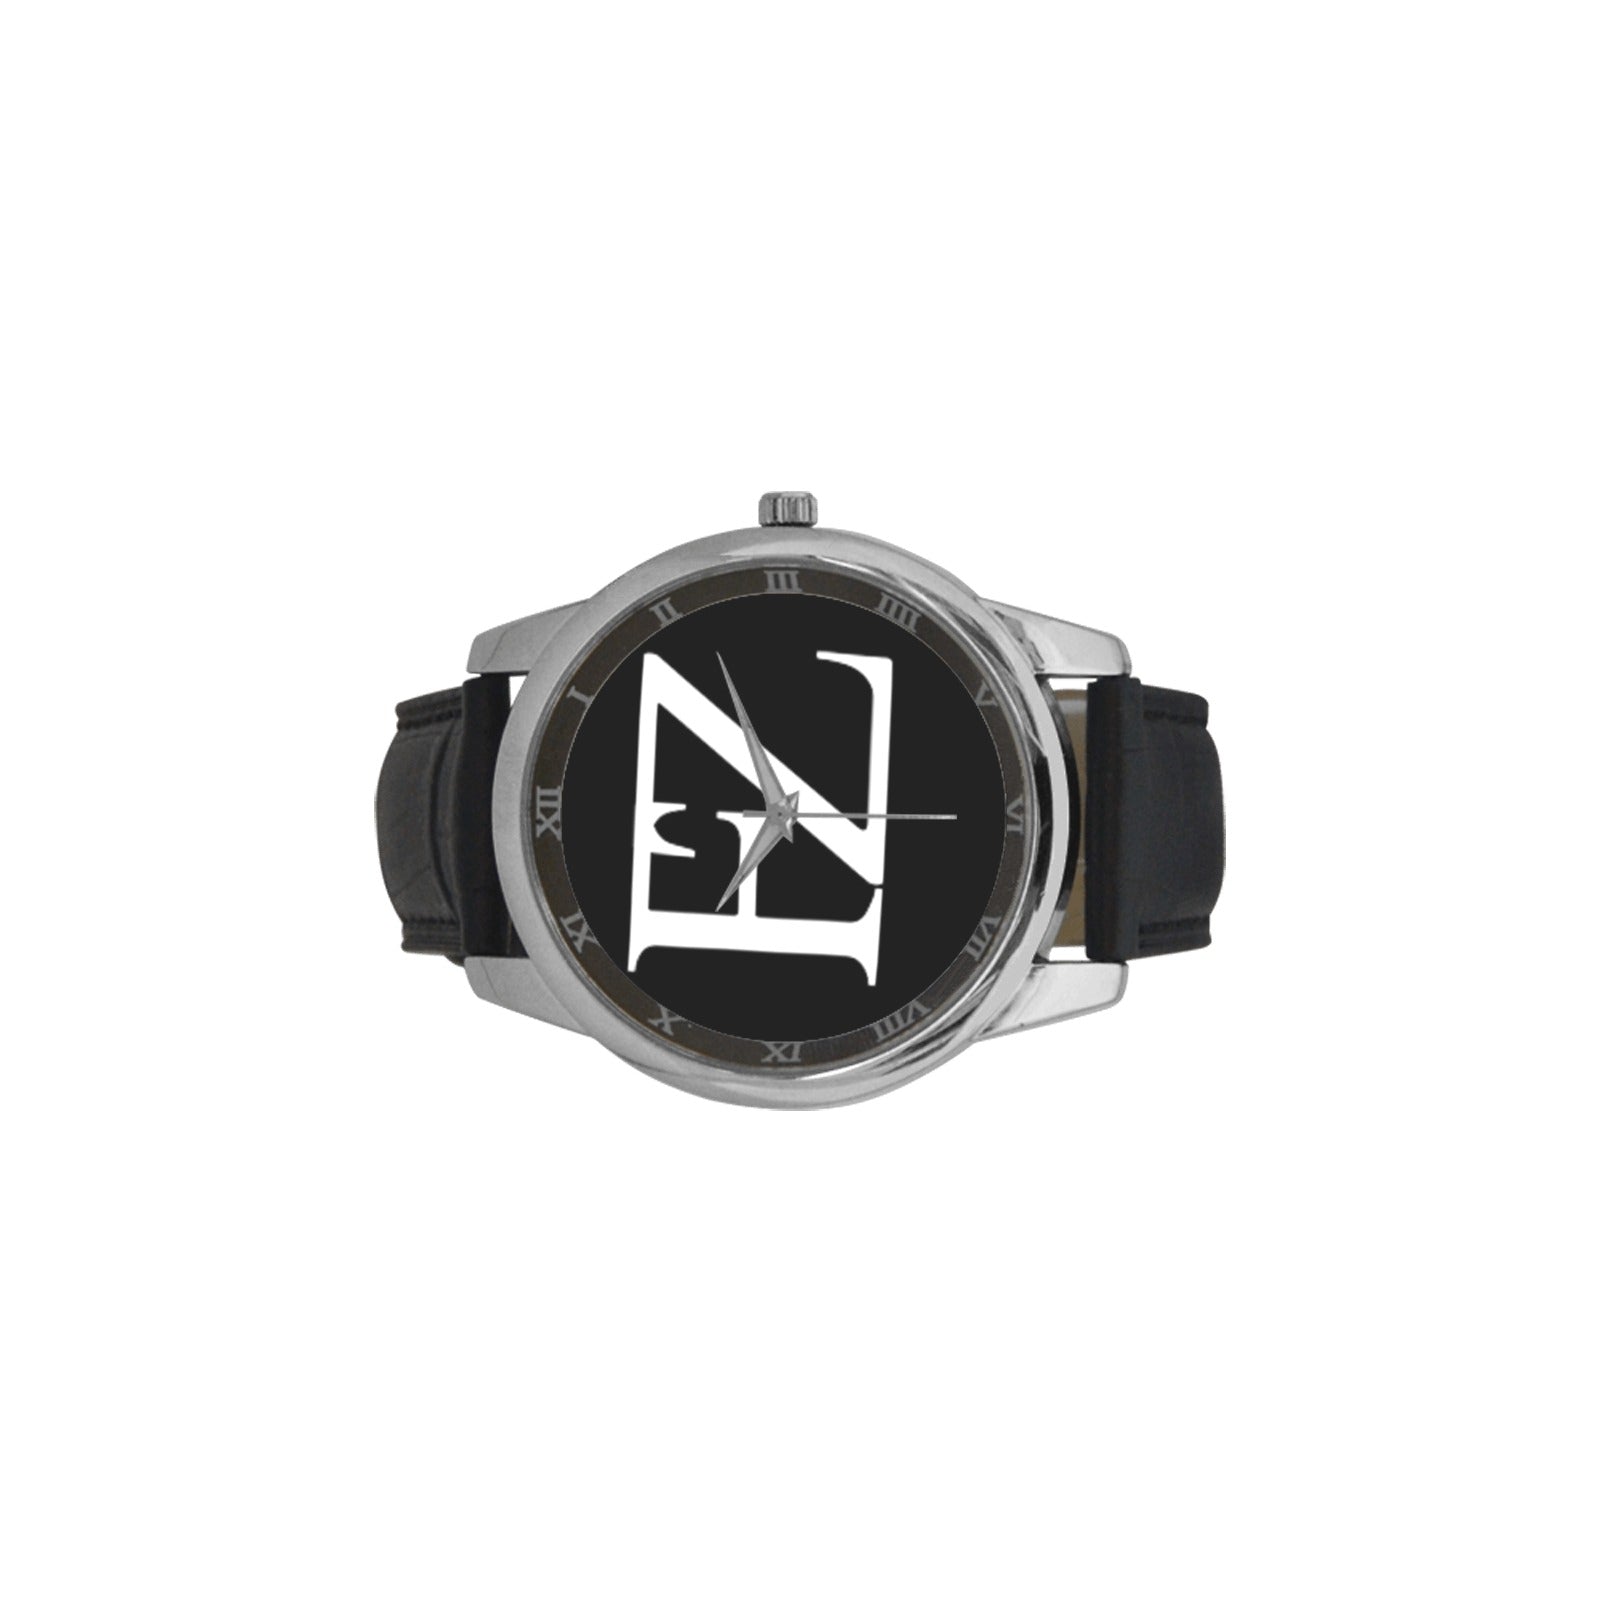 fz original watch men's leather strap large dial watch (model 213)